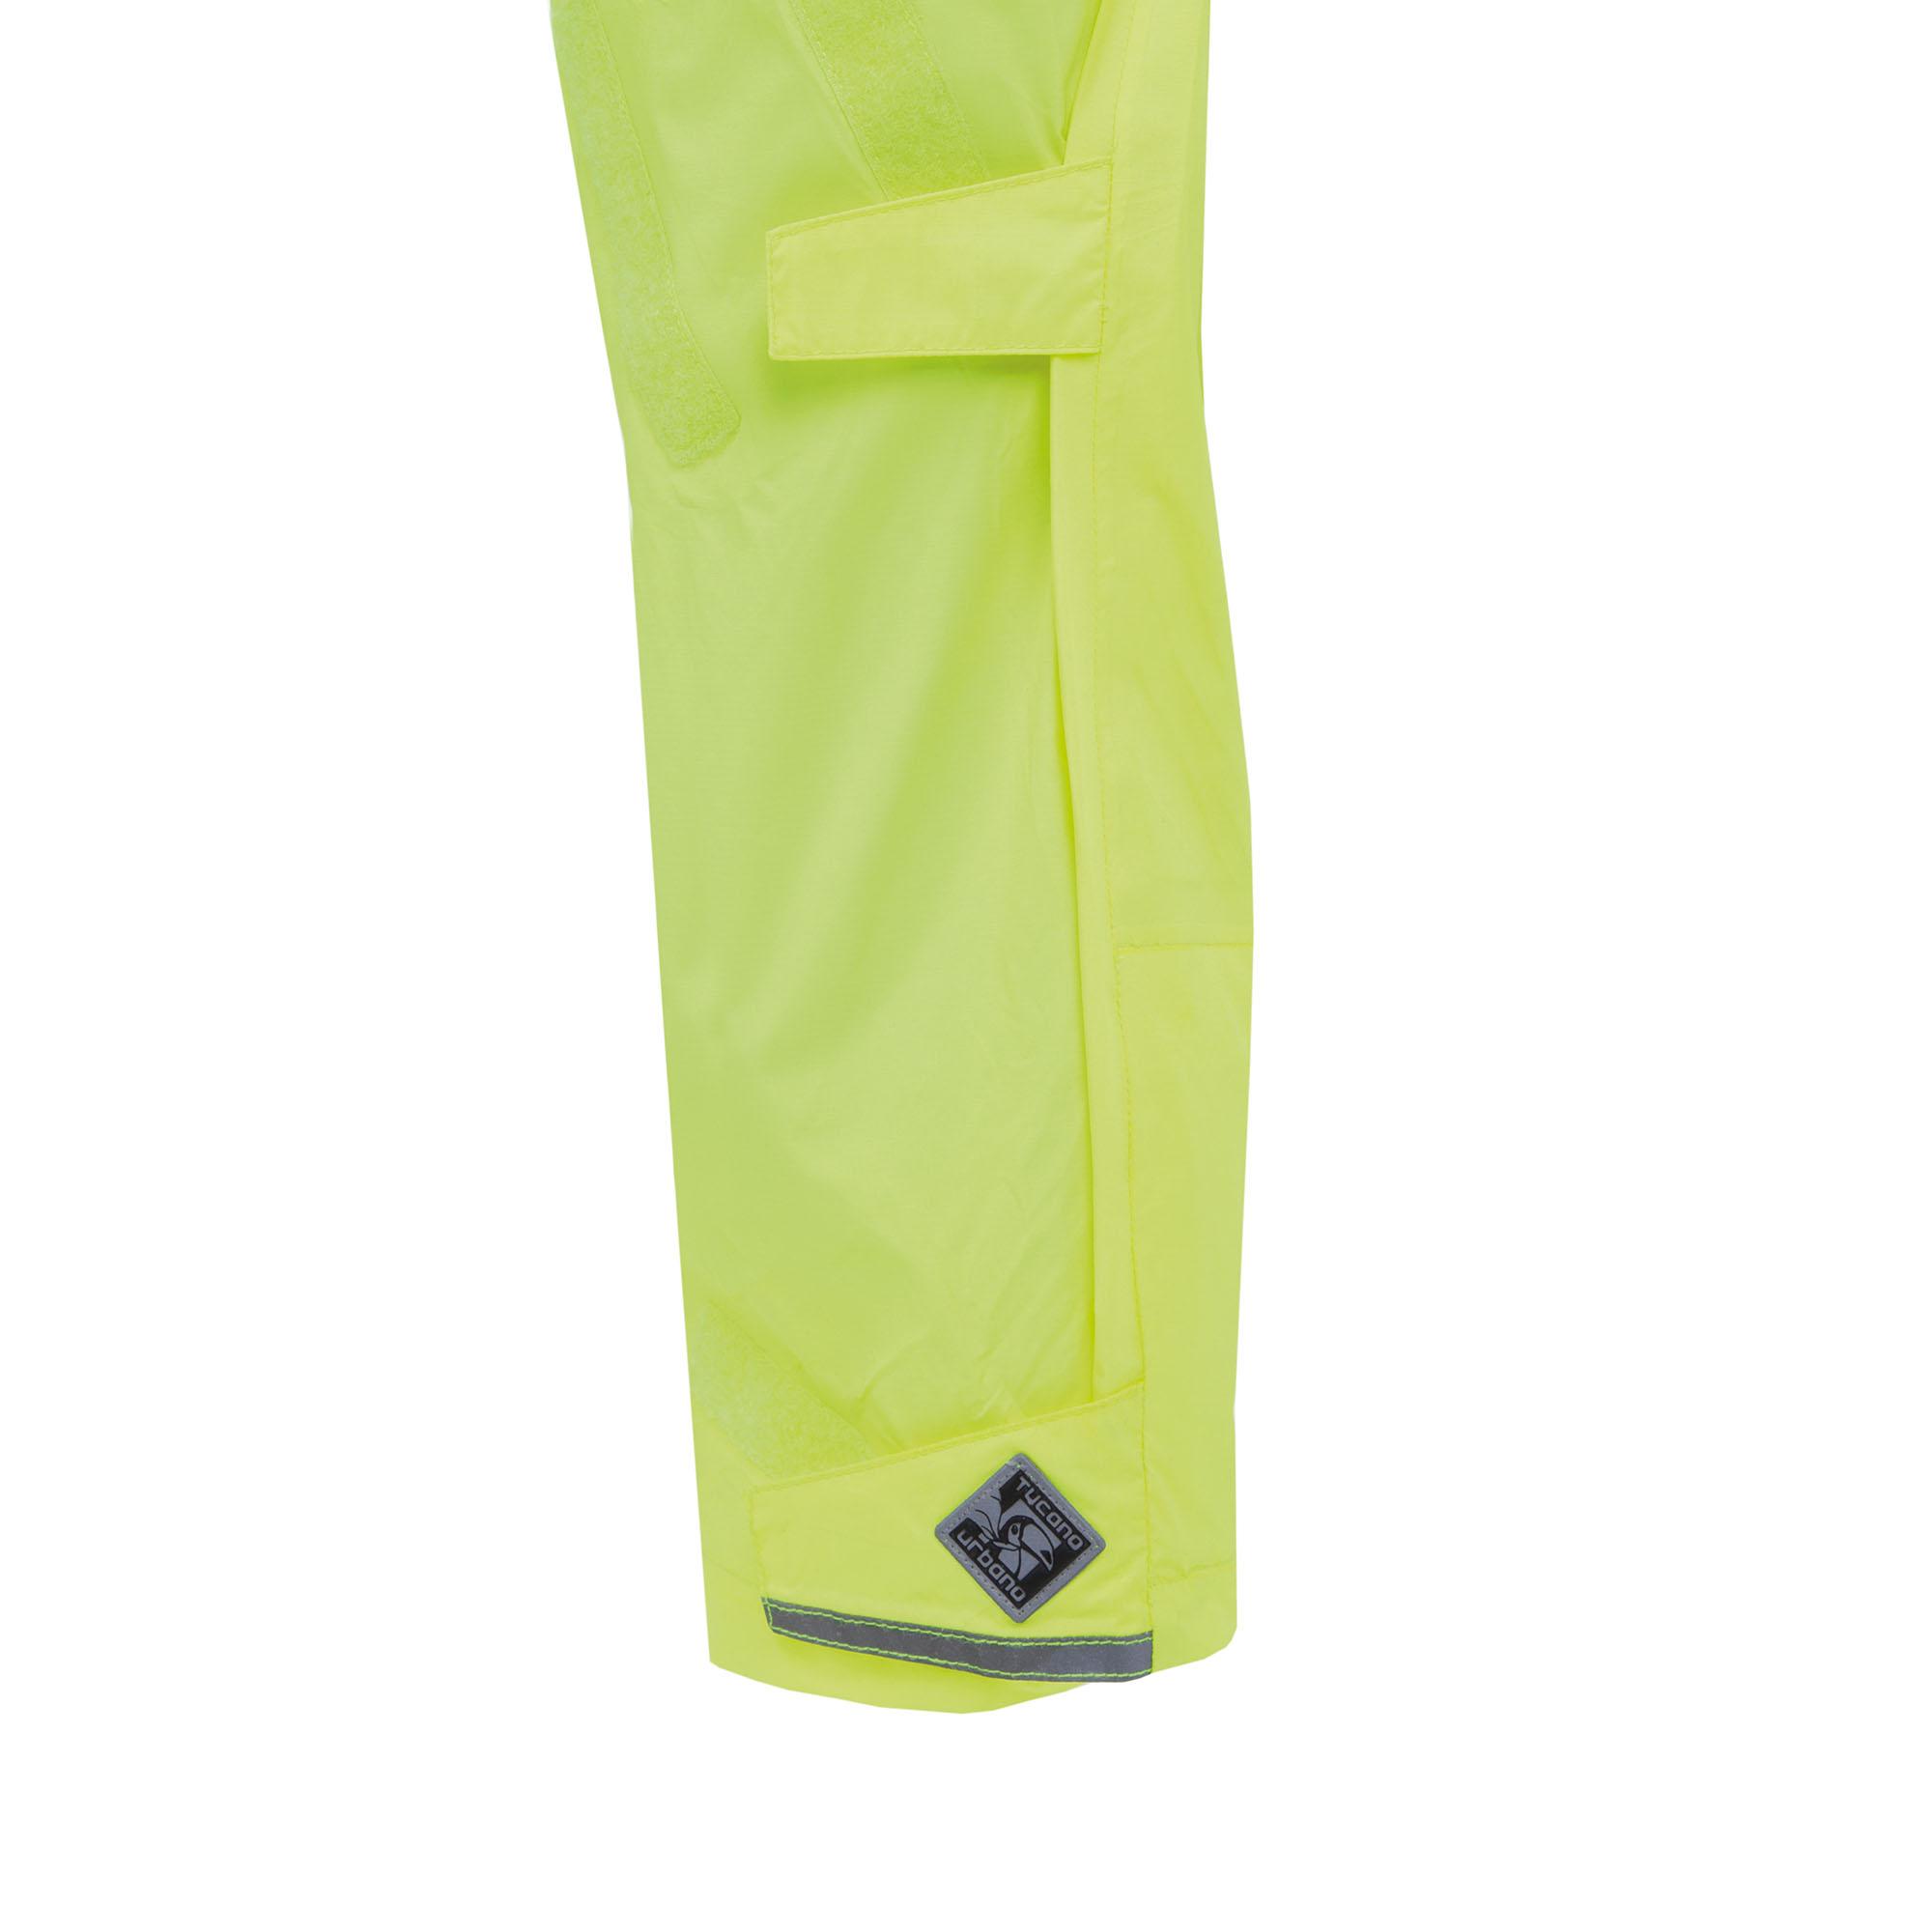 Rainproof Trousers Panta Nano Rain Zeta Fluorescent Yellow Tucano Urbano